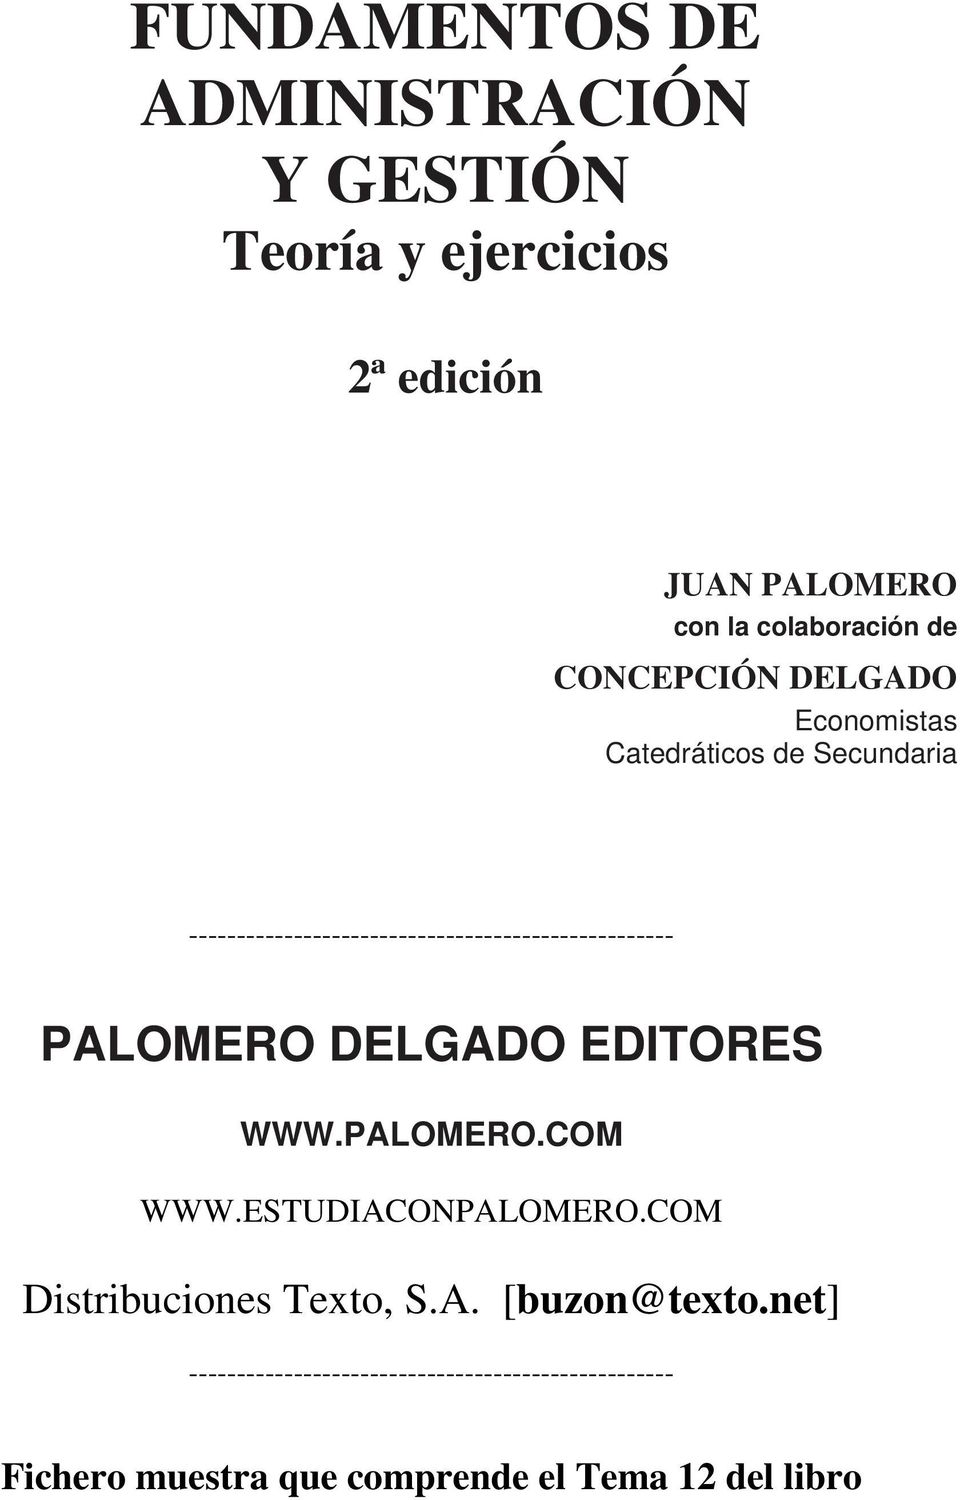 --------------------------------------------------- PALOMERO DELGADO EDITORES WWW.PALOMERO.COM WWW.